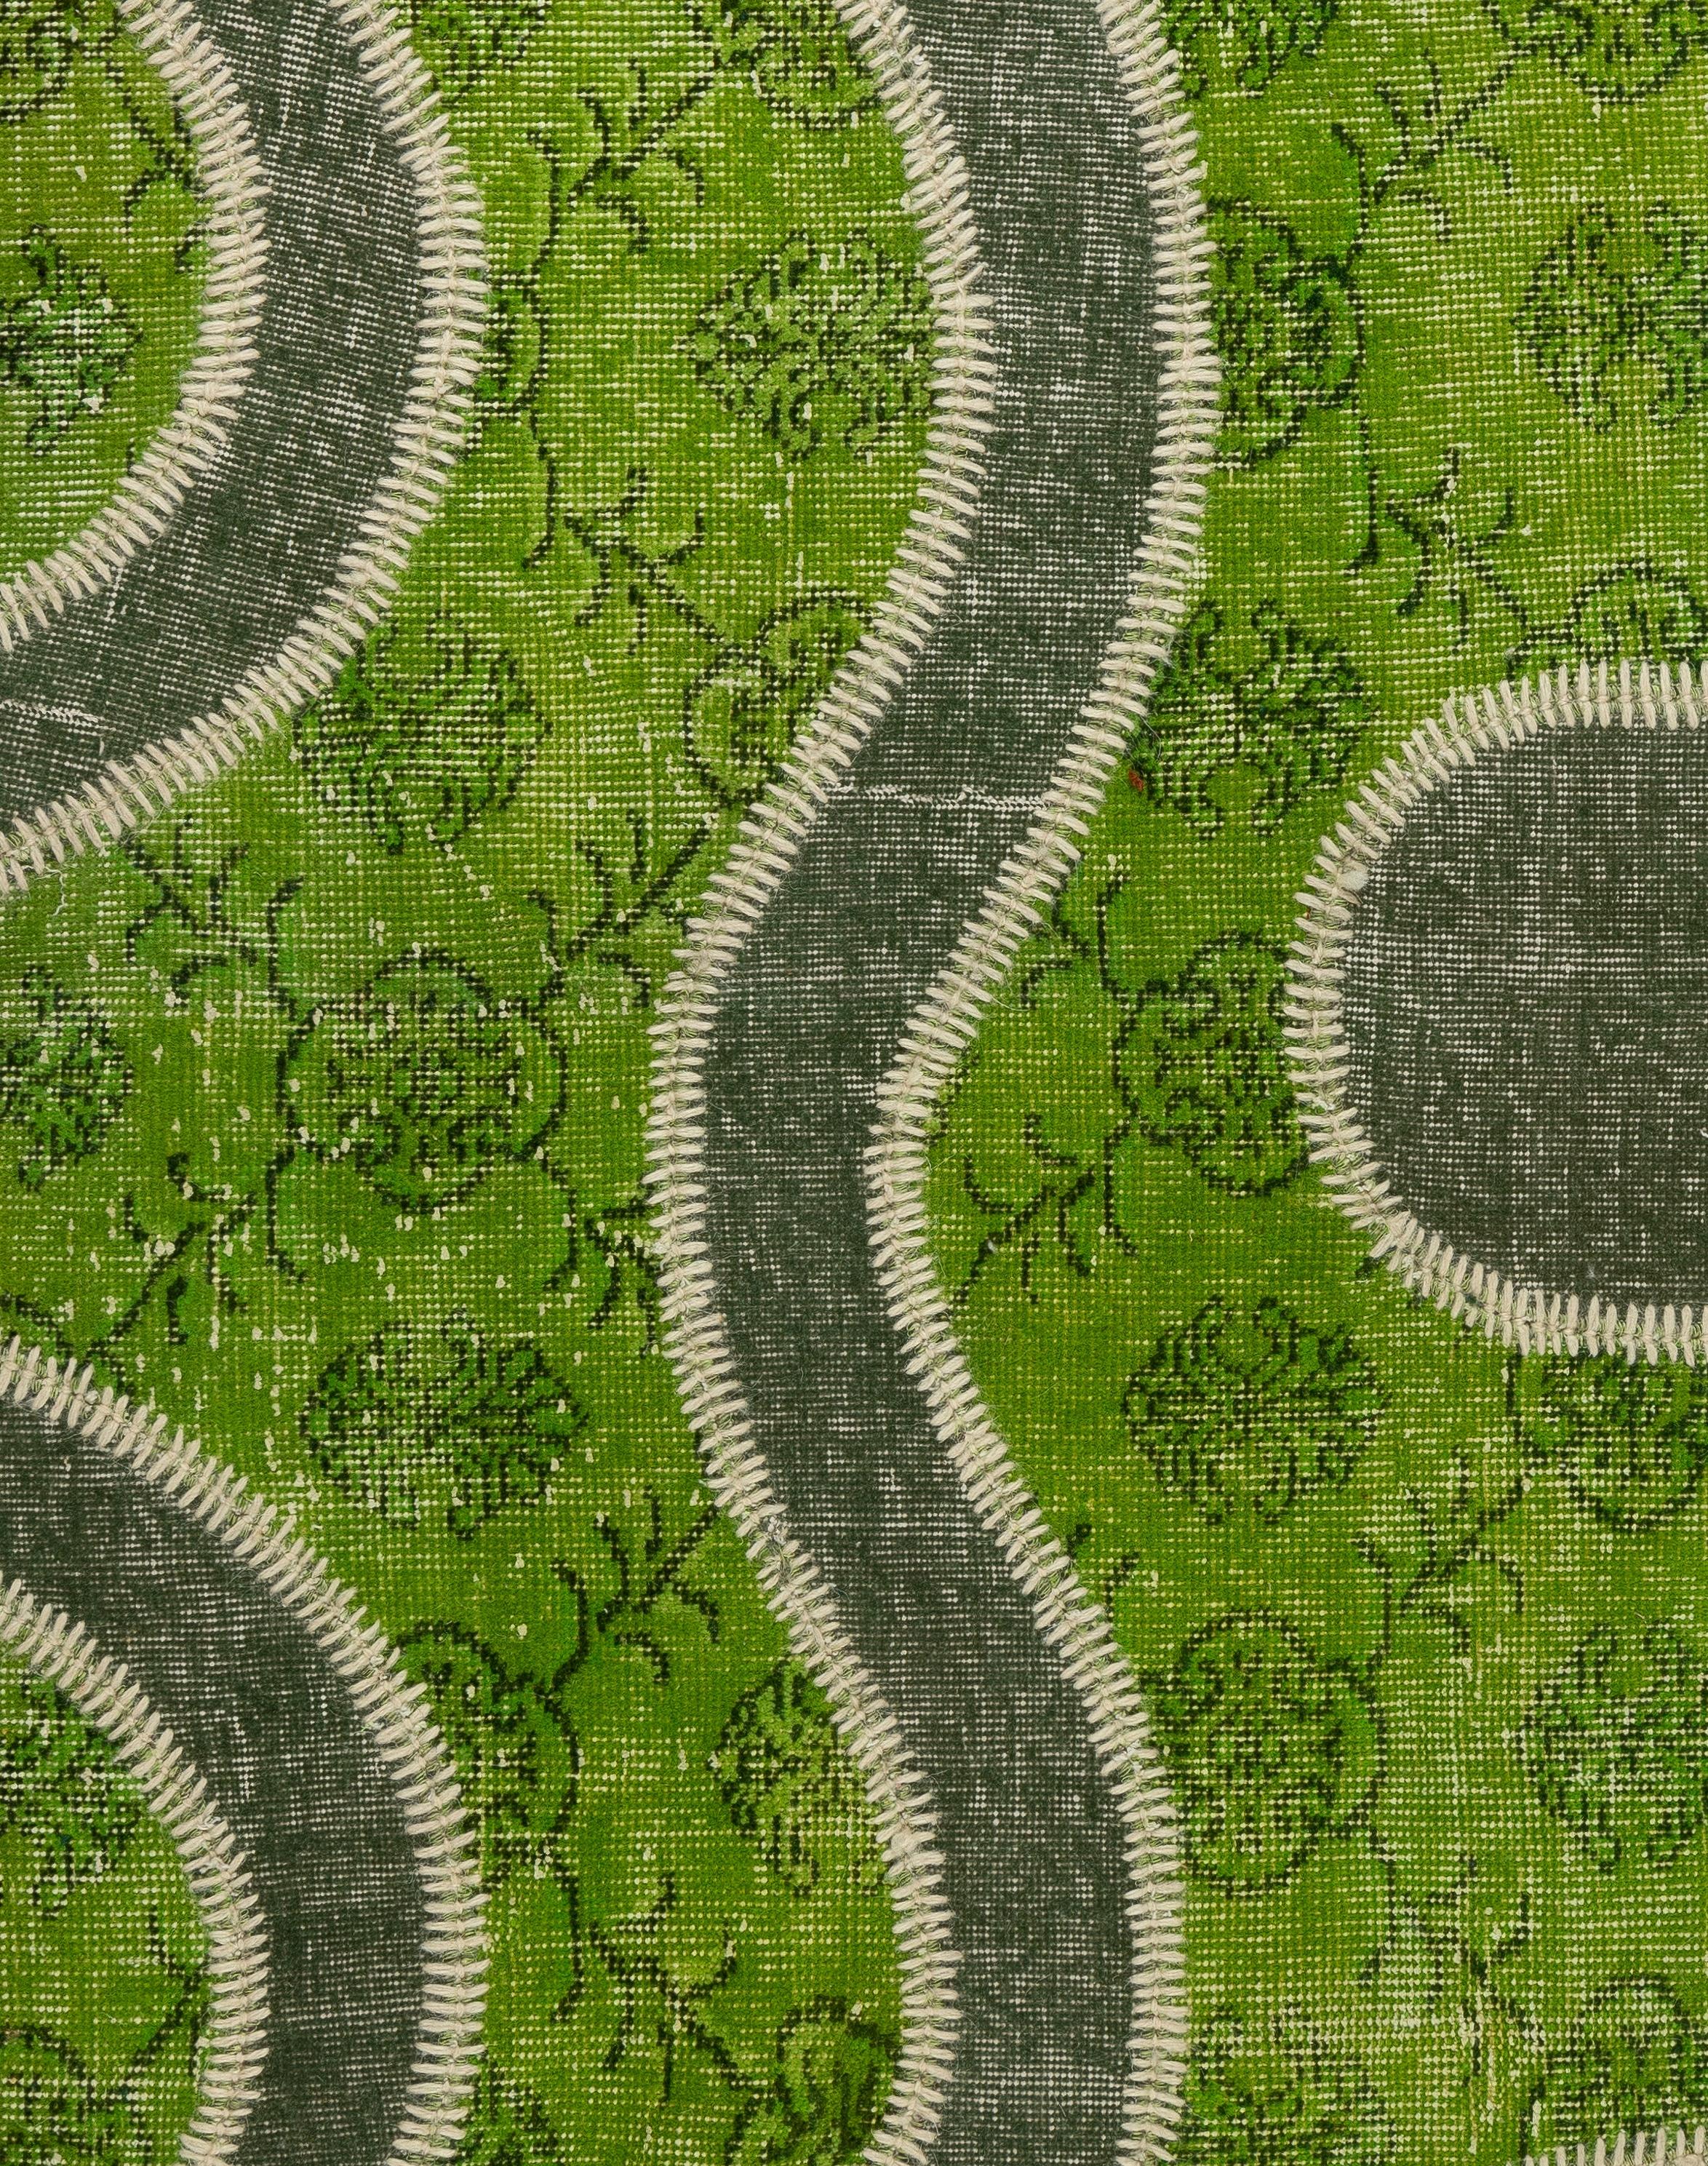 Turkish Handmade Patchwork Rug in Shades of Green. Living Room Decor Woolen Carpet For Sale